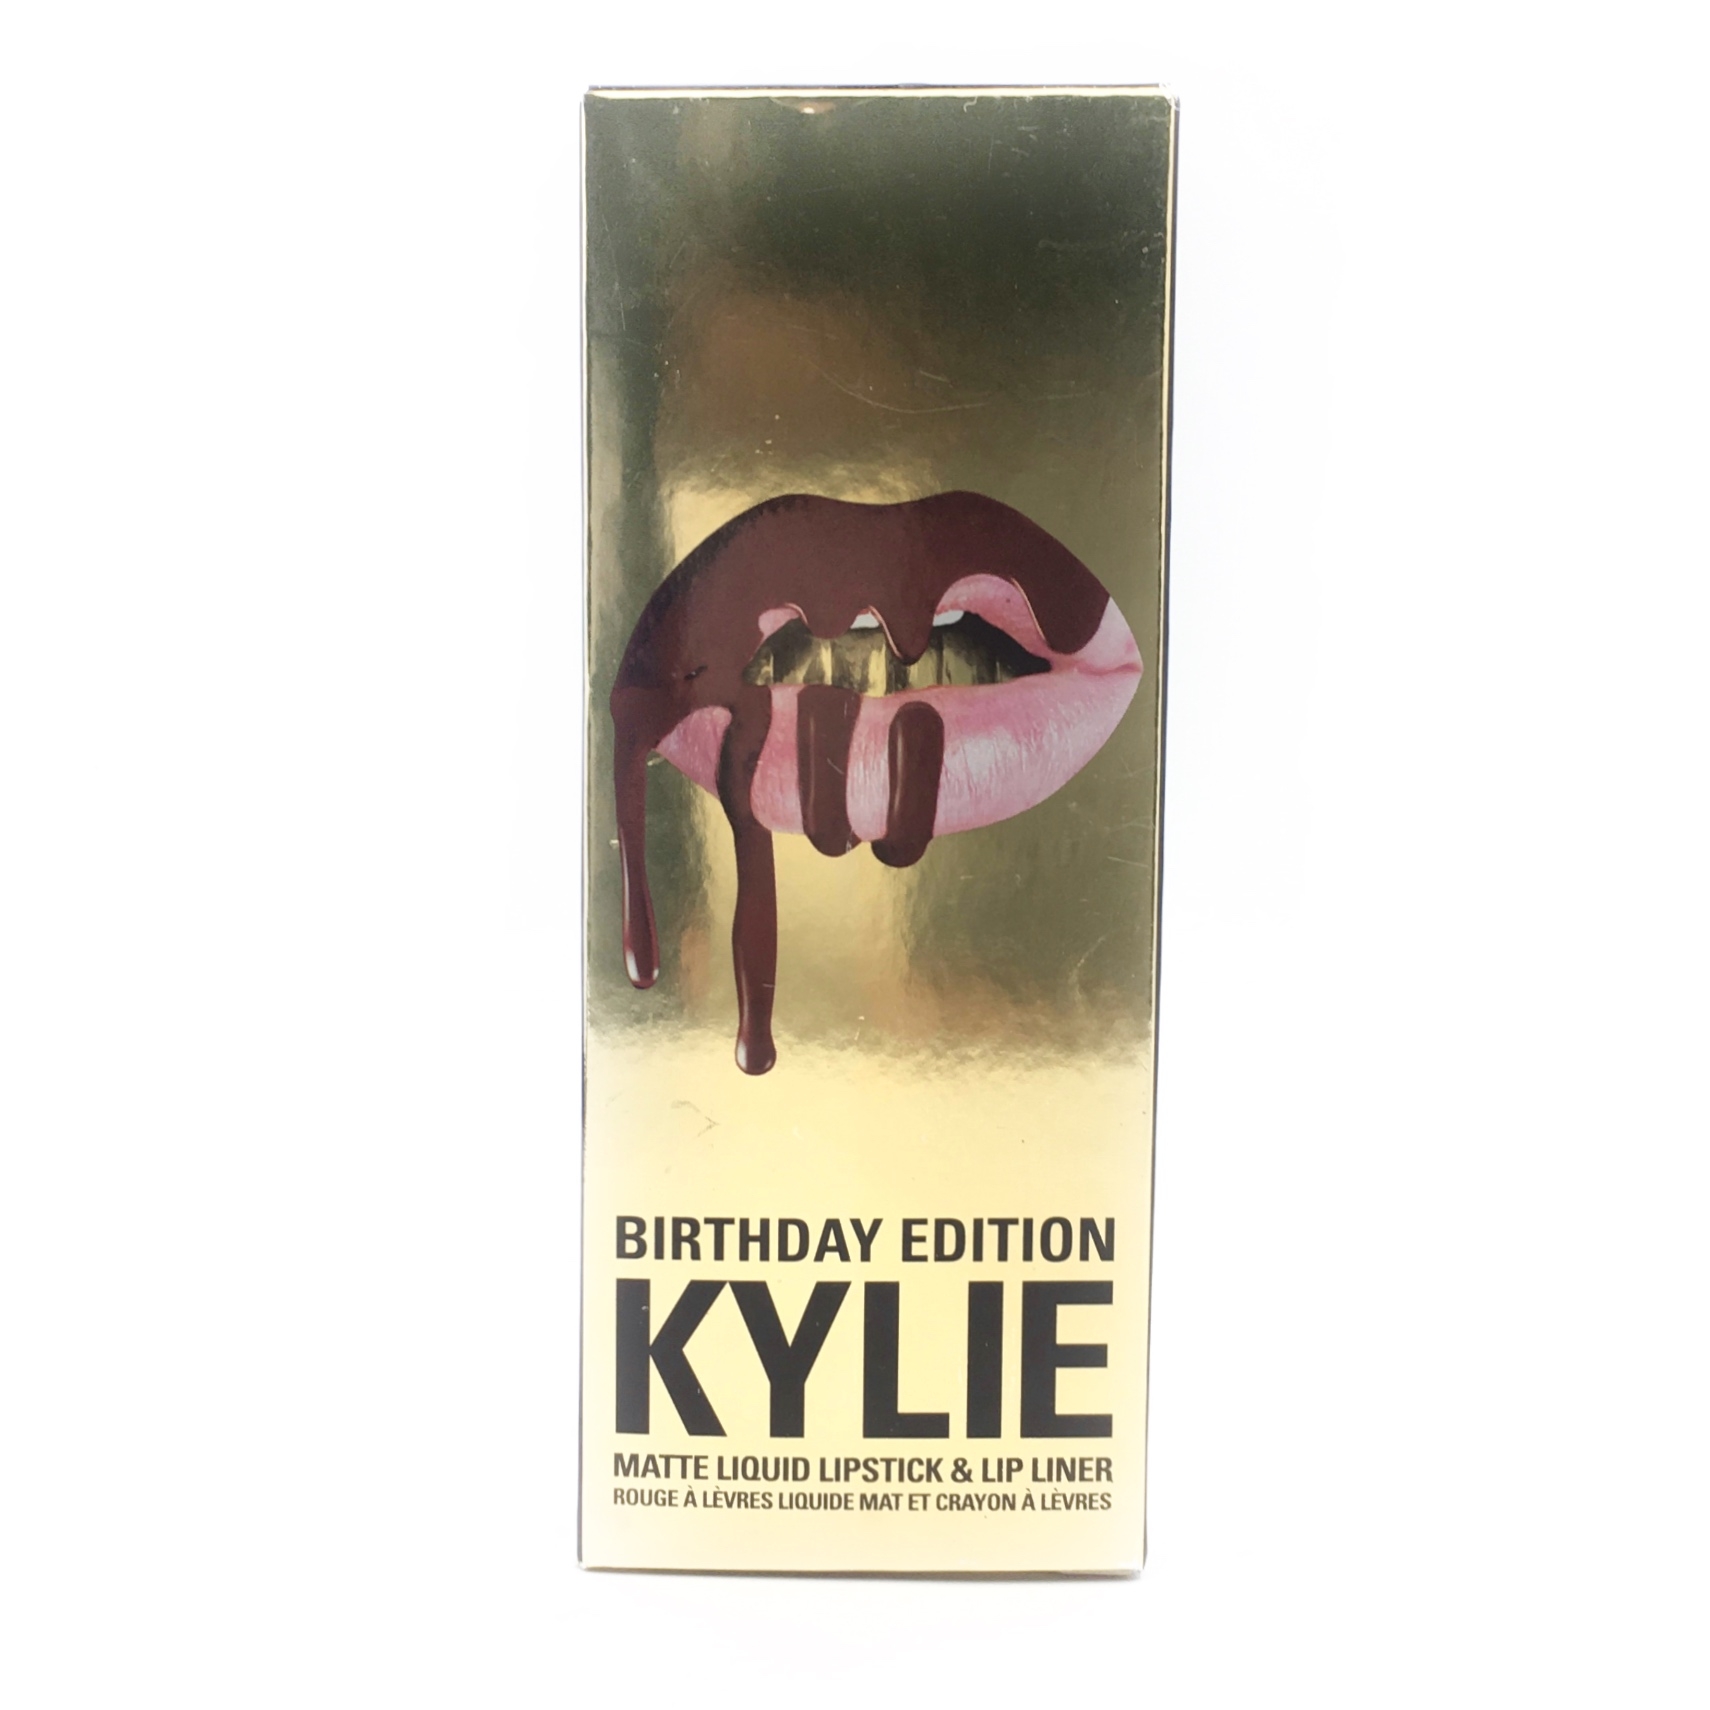 KylieBirthday Edition Leo Matte Liquid Lipstick & Lip Liner